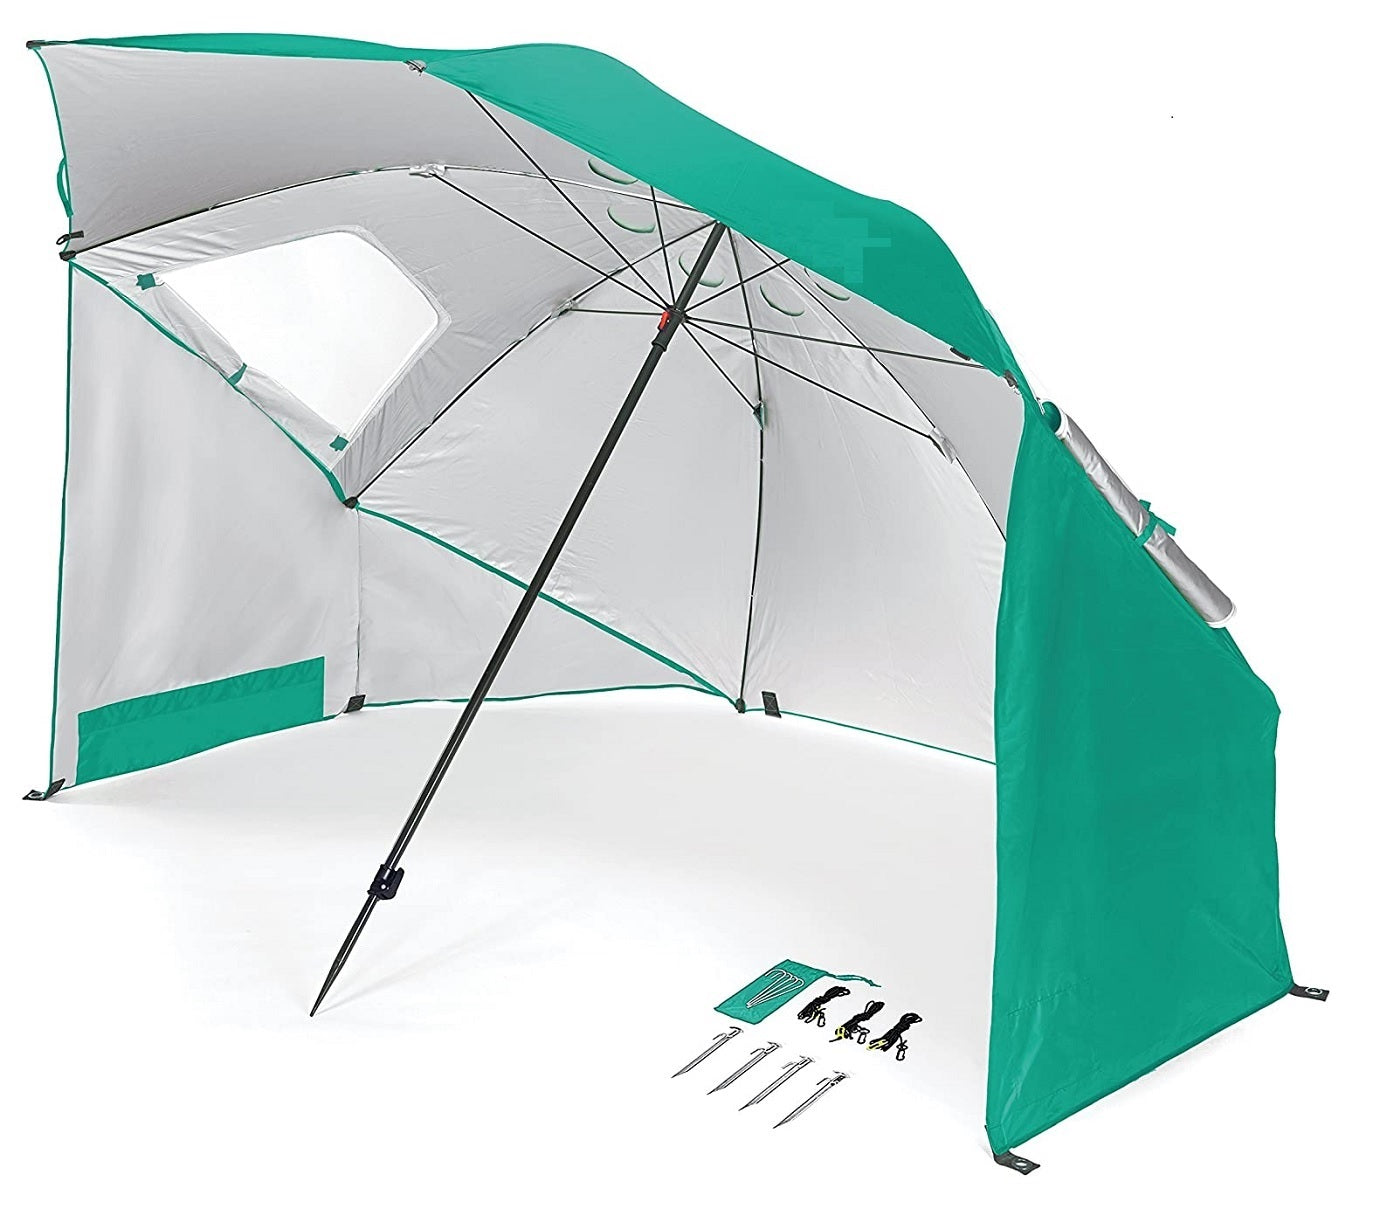 Sport-Brella XL 9 Feet Wide Portable Umbrella Canopy Mermaid Green